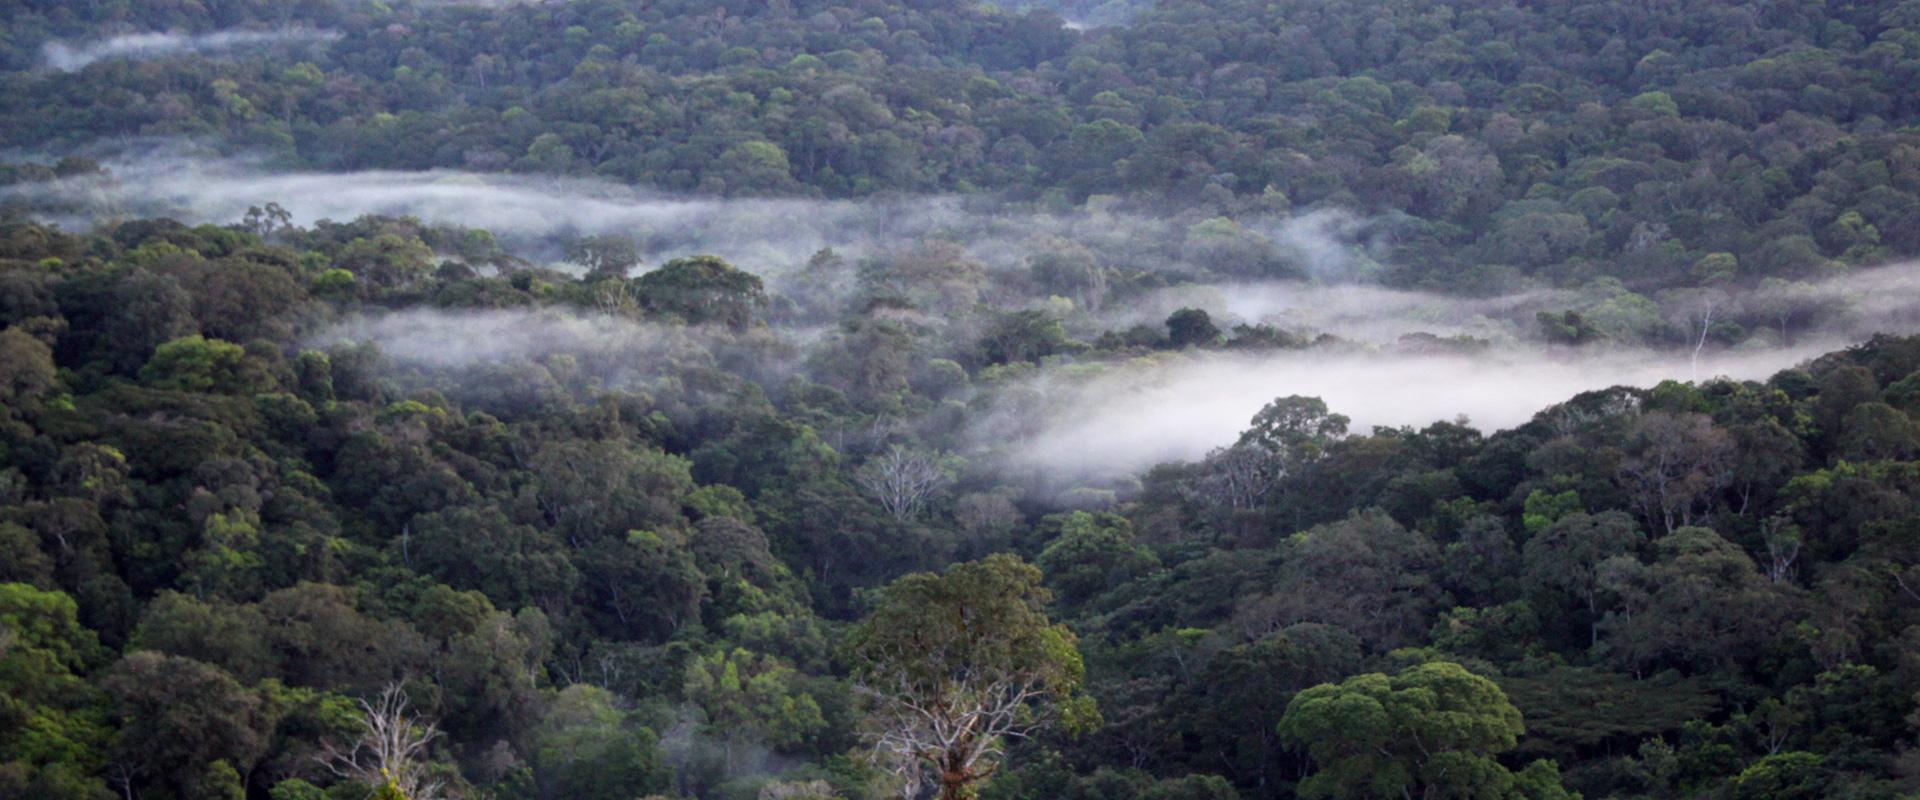 Amazon forest, French Guiana